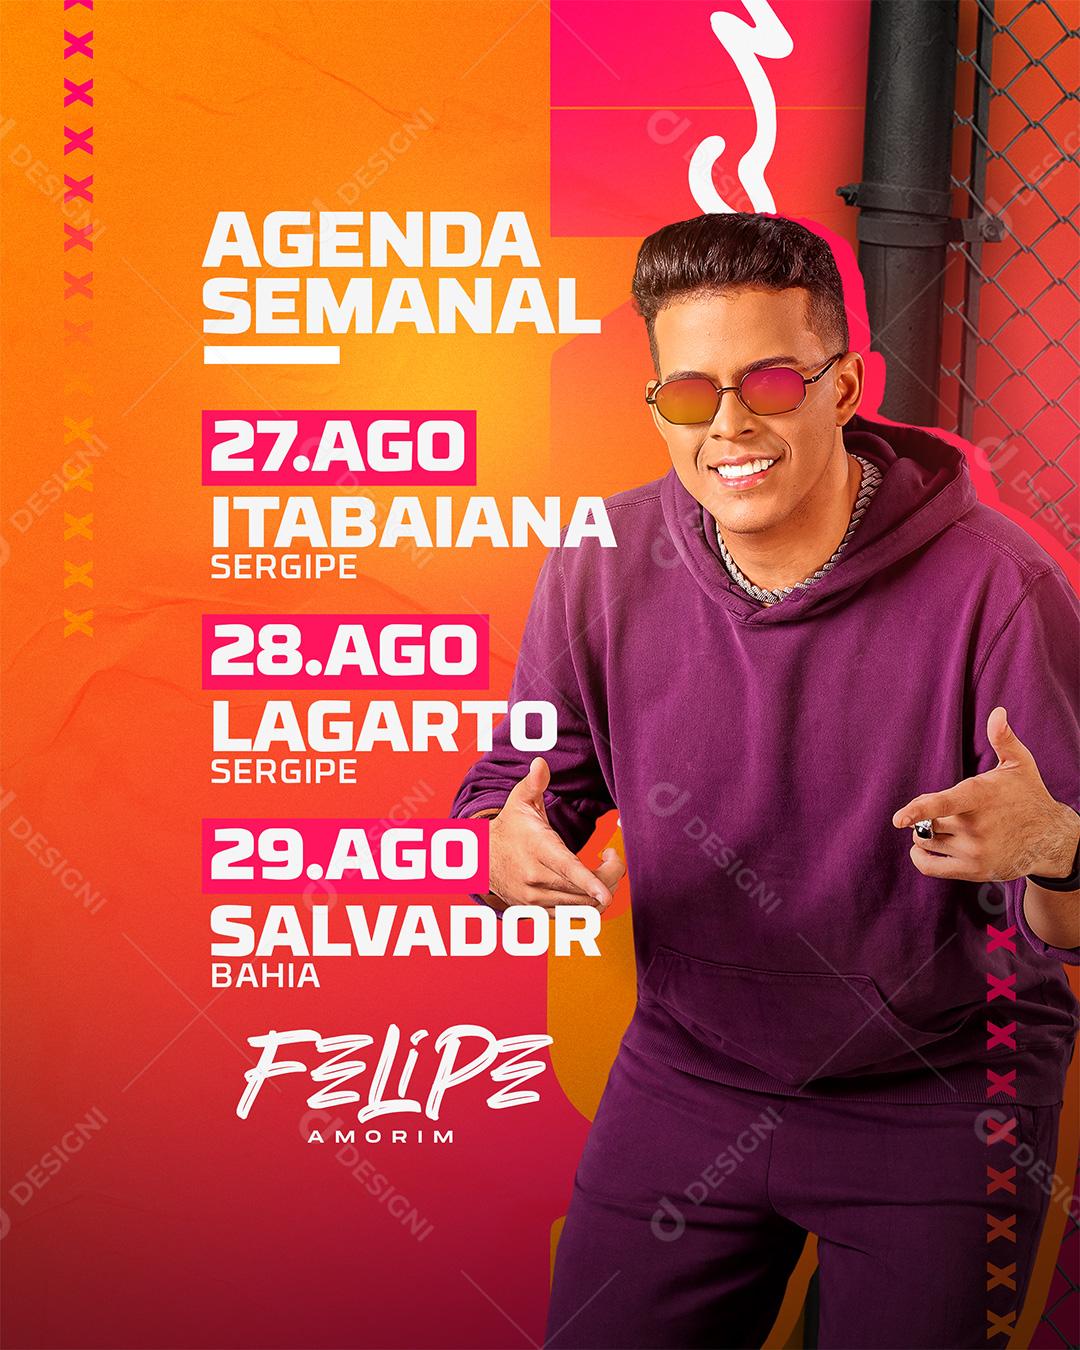 Social Media Agenda Semanal Felipe Amorim Flyers PSD Editável